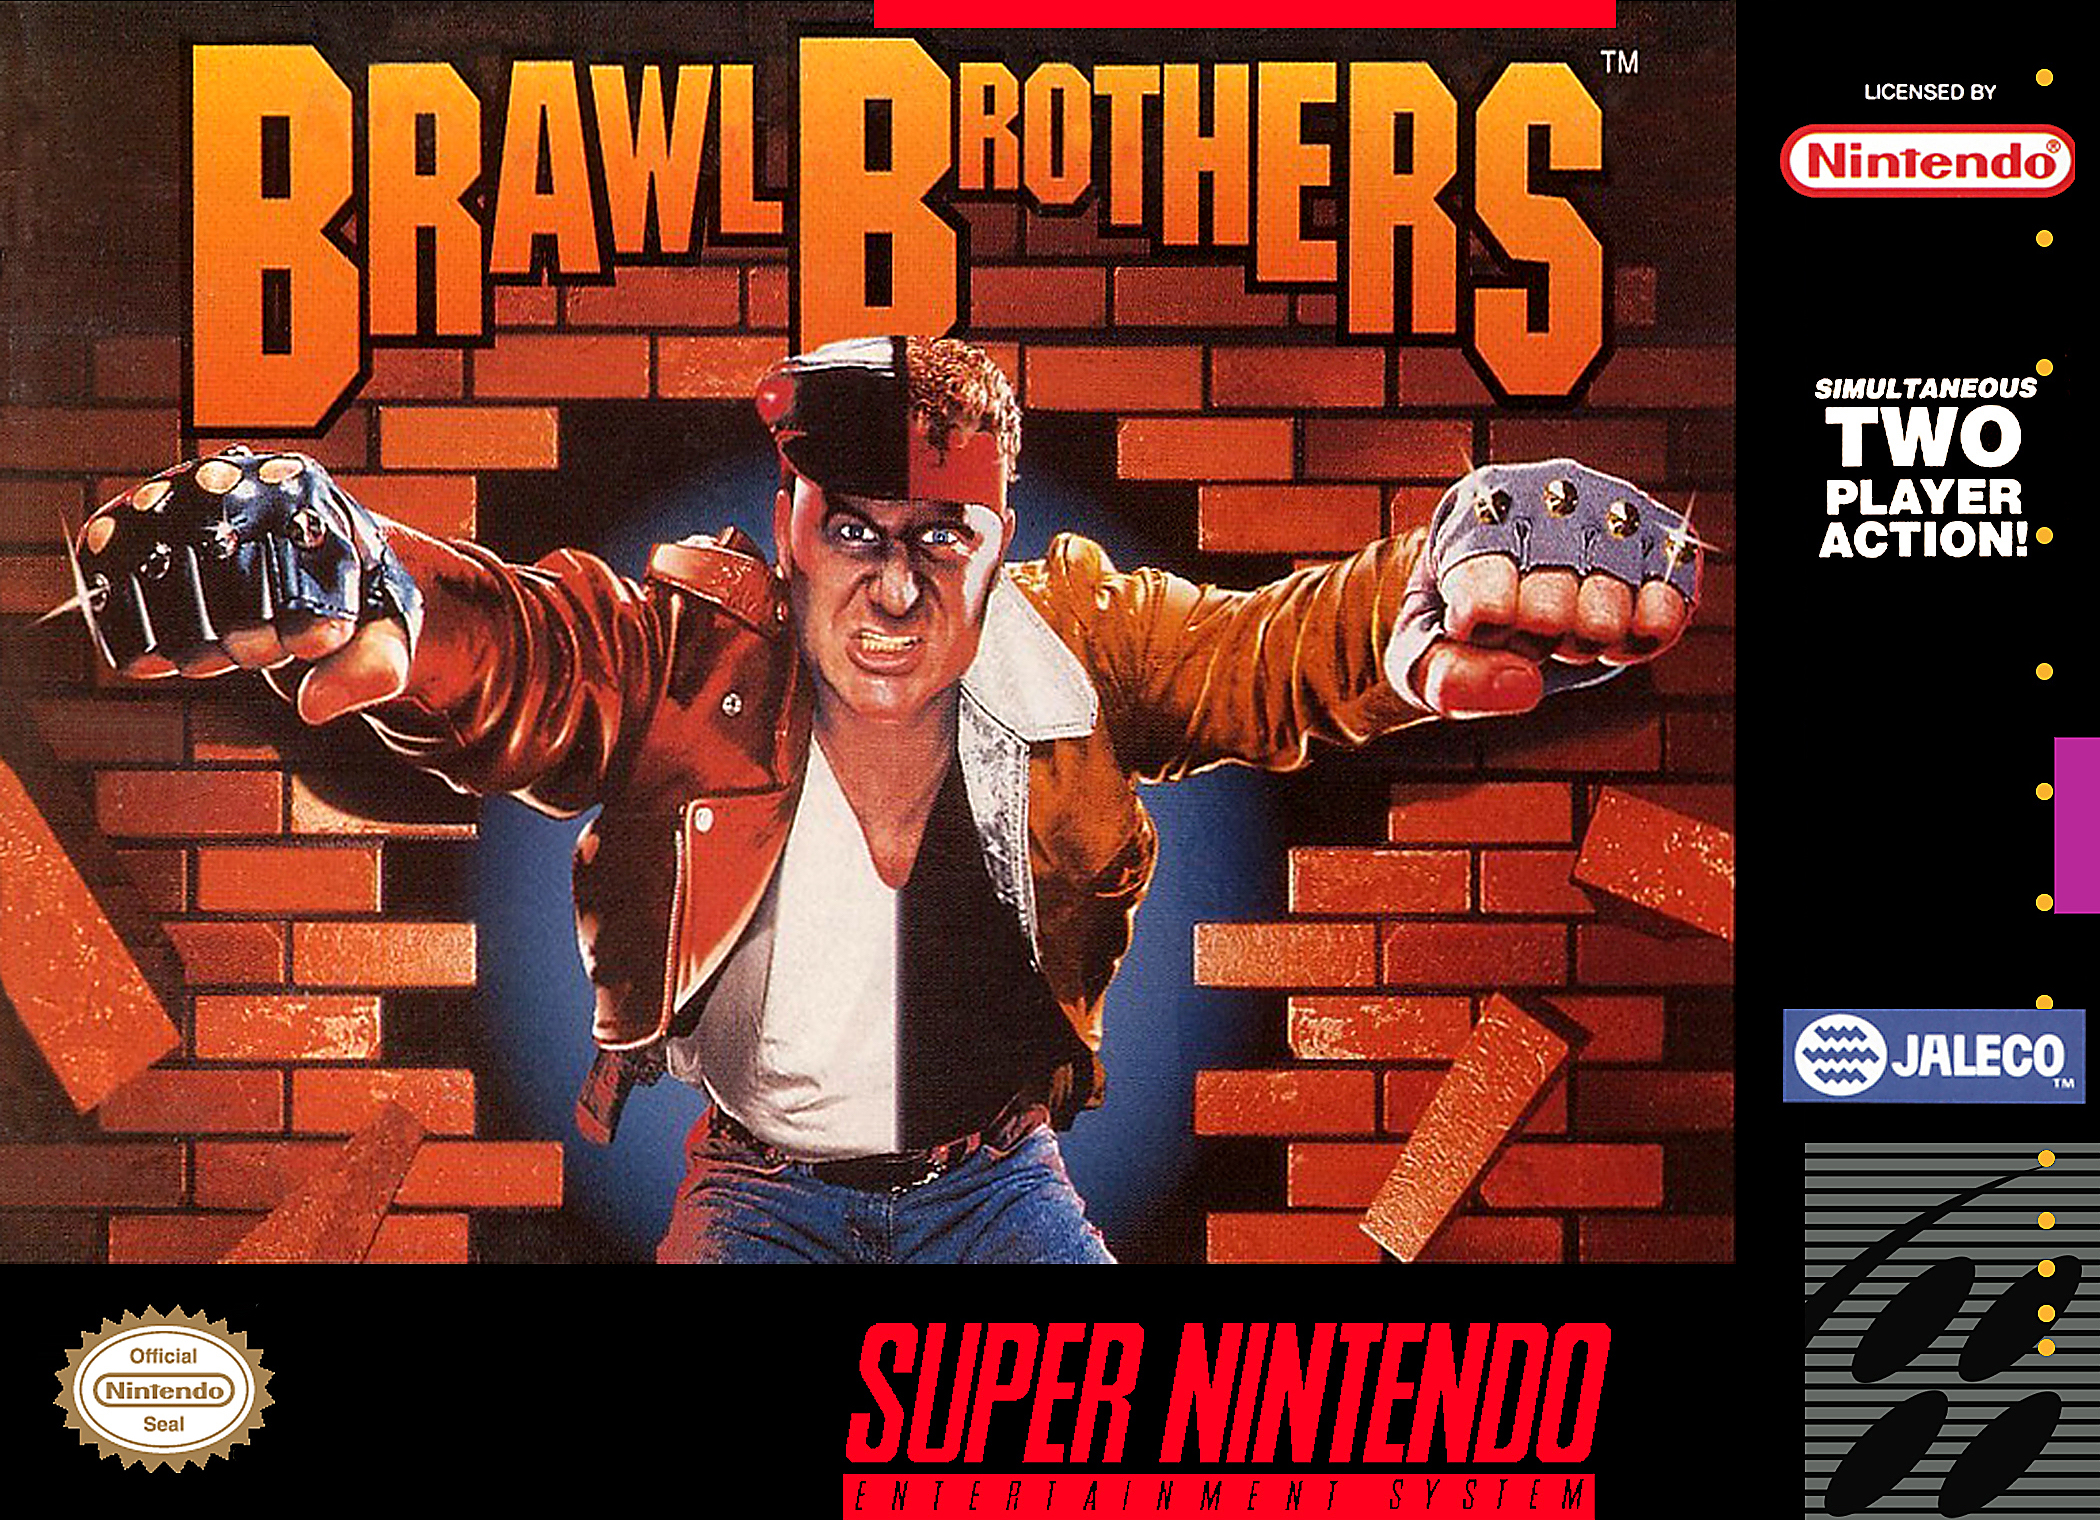 Brawl Brothers switch box art